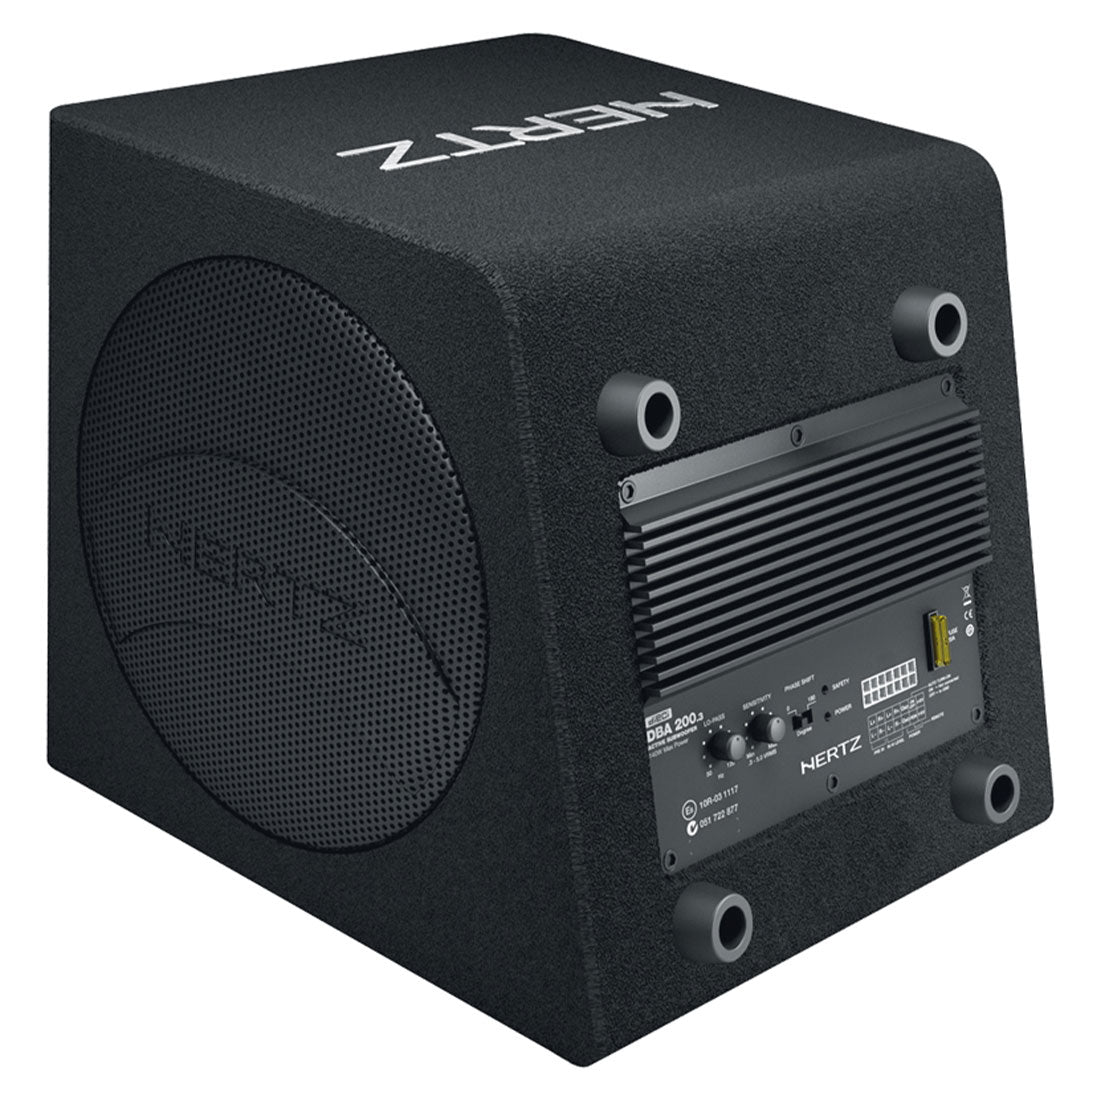 DS 30.3 - Hertz car audio systems